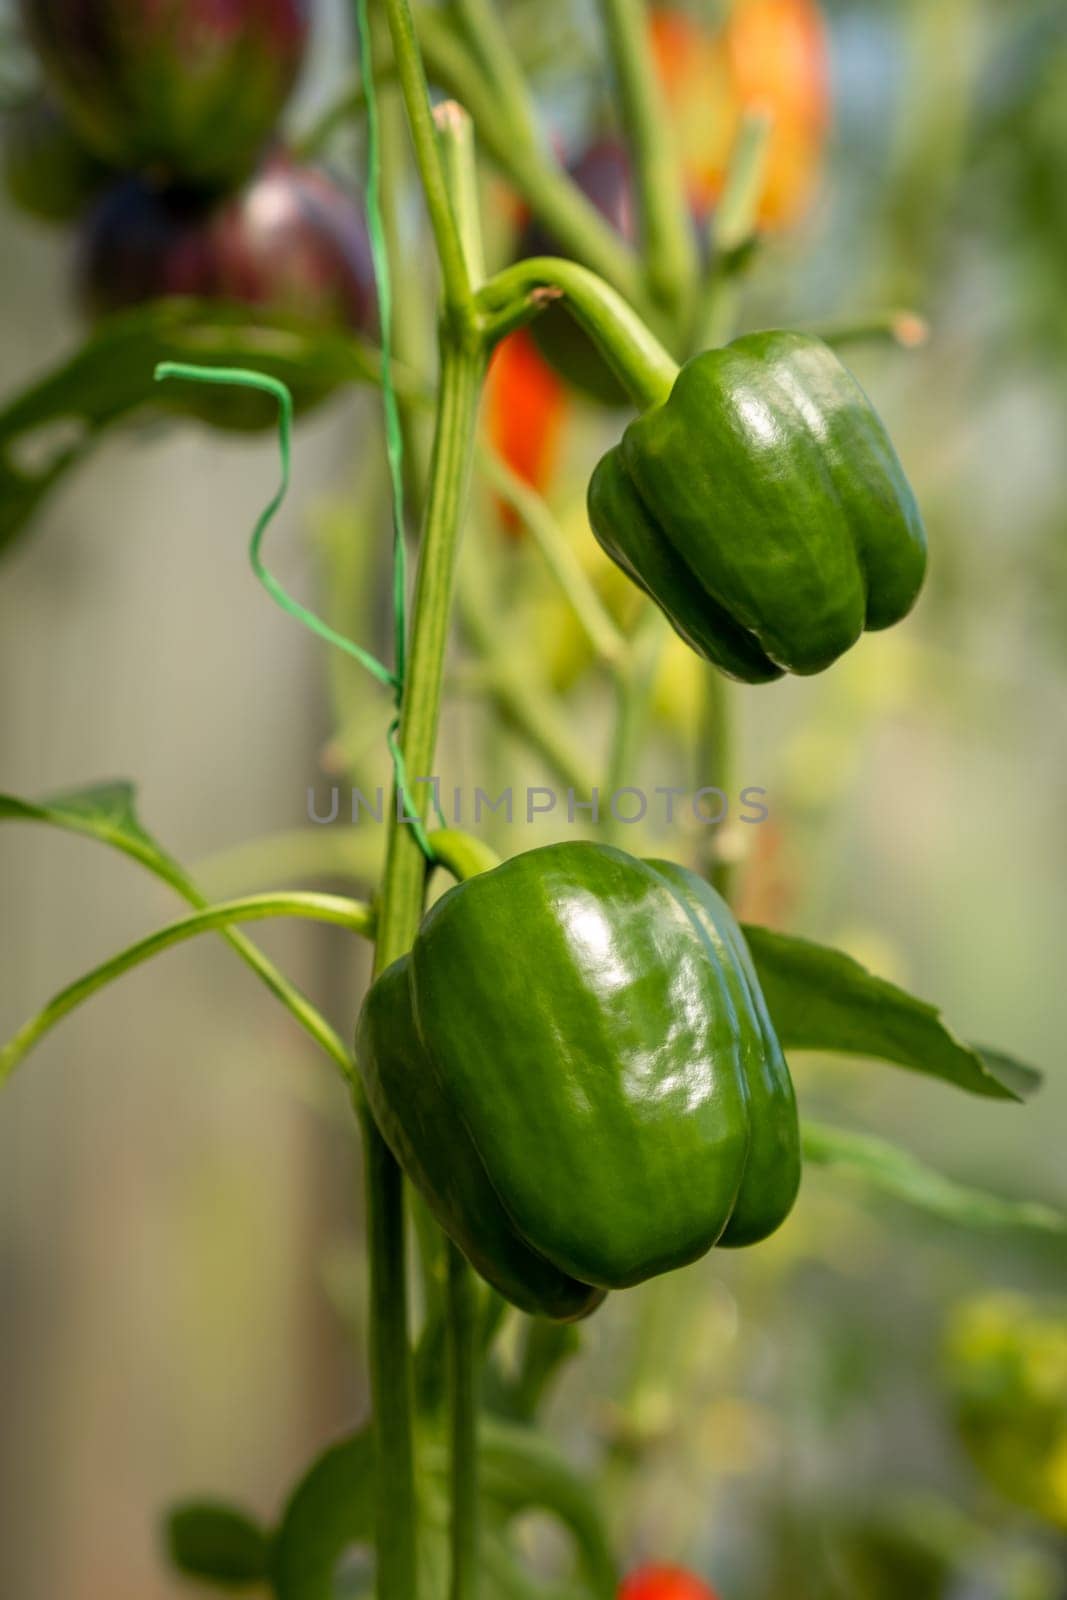 Ripe, green peppers on a bush in a greenhouse or garden in a vegetable garden. Peppers in a greenhouse. Green pepper plantation. Organic farming, growing young green peppers in a greenhouse.